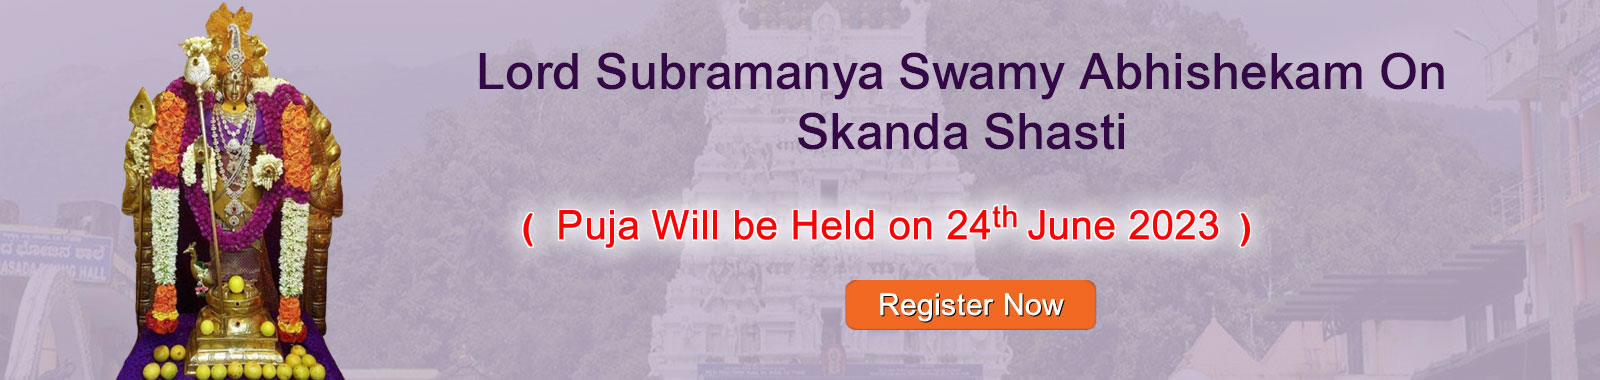 Lord Subramanya Swamy Abhishekam On Skanda Shasti